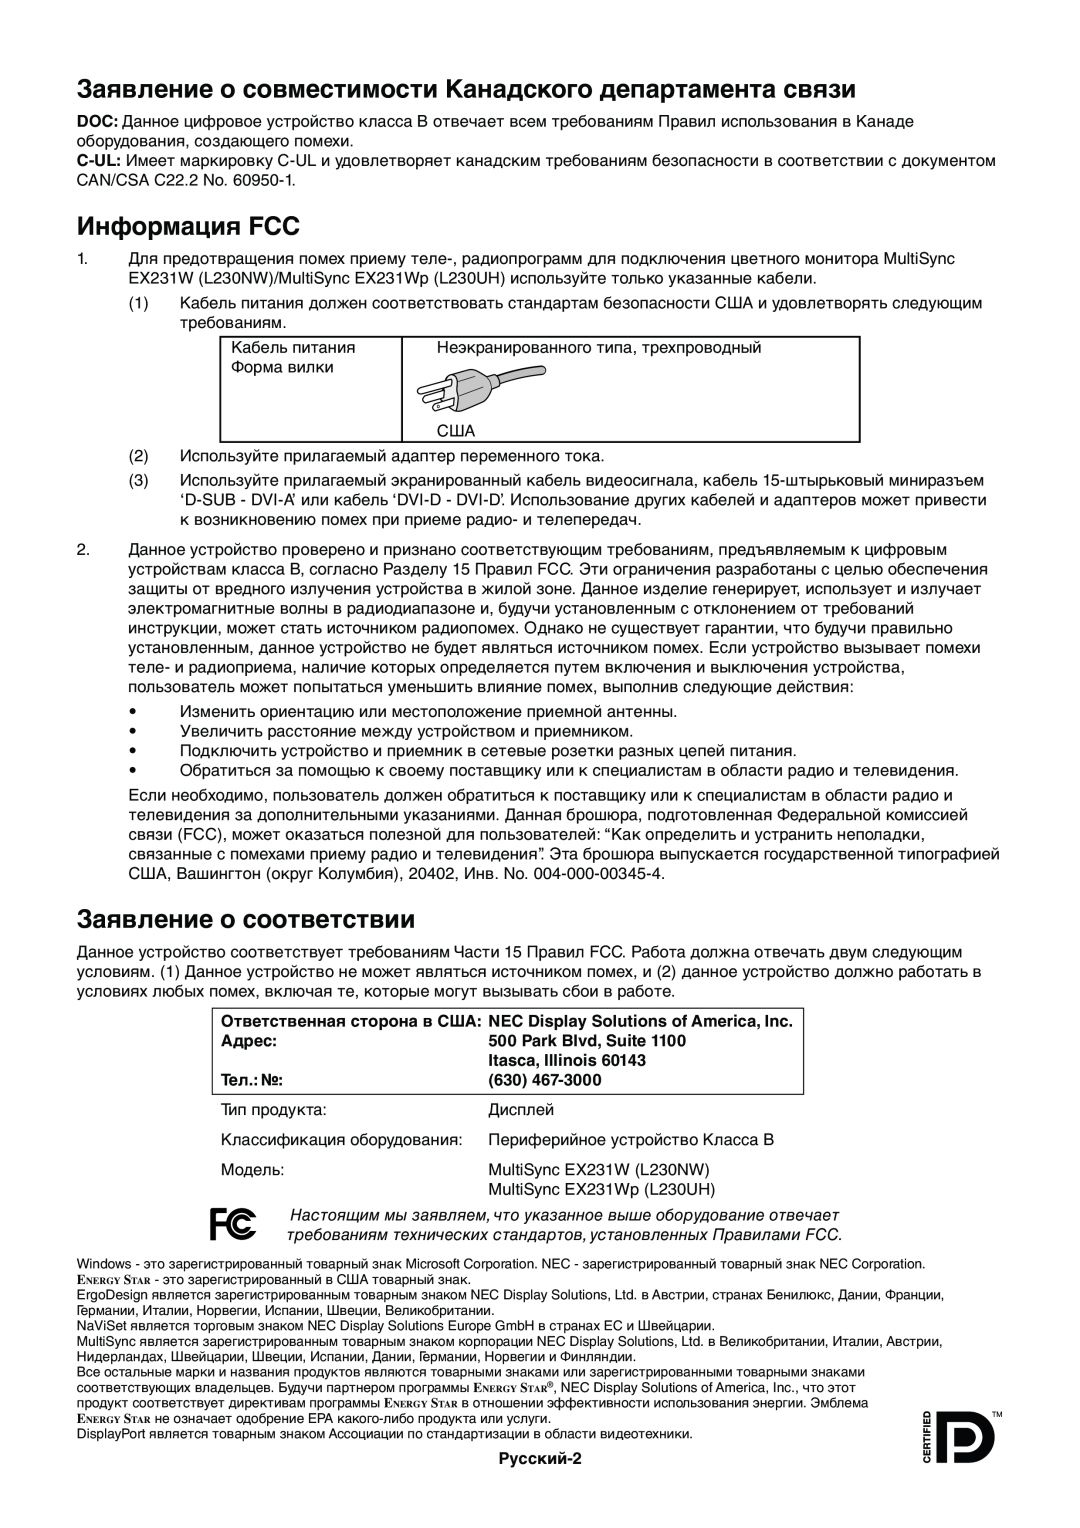 NEC EX231WP manual Информация FCC, Заявление о соответствии, Адрес, Park Blvd, Suite, Itasca, Illinois, Русский-2 